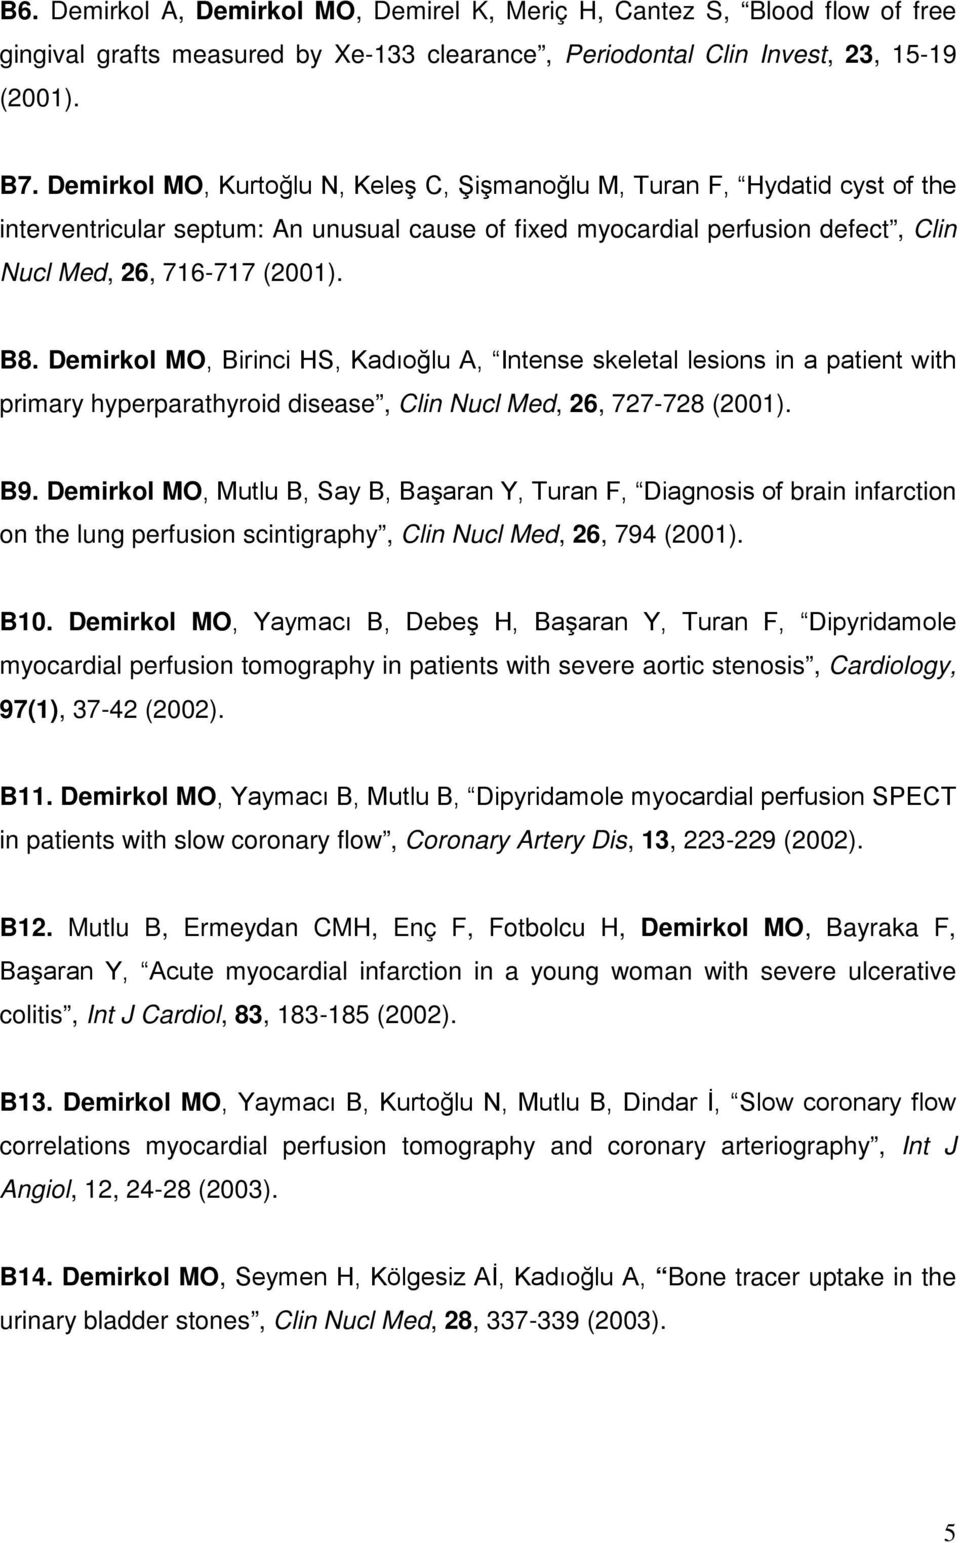 Demirkol MO, Birinci HS, Kadıoğlu A, Intense skeletal lesions in a patient with primary hyperparathyroid disease, Clin Nucl Med, 26, 727-728 (2001). B9.